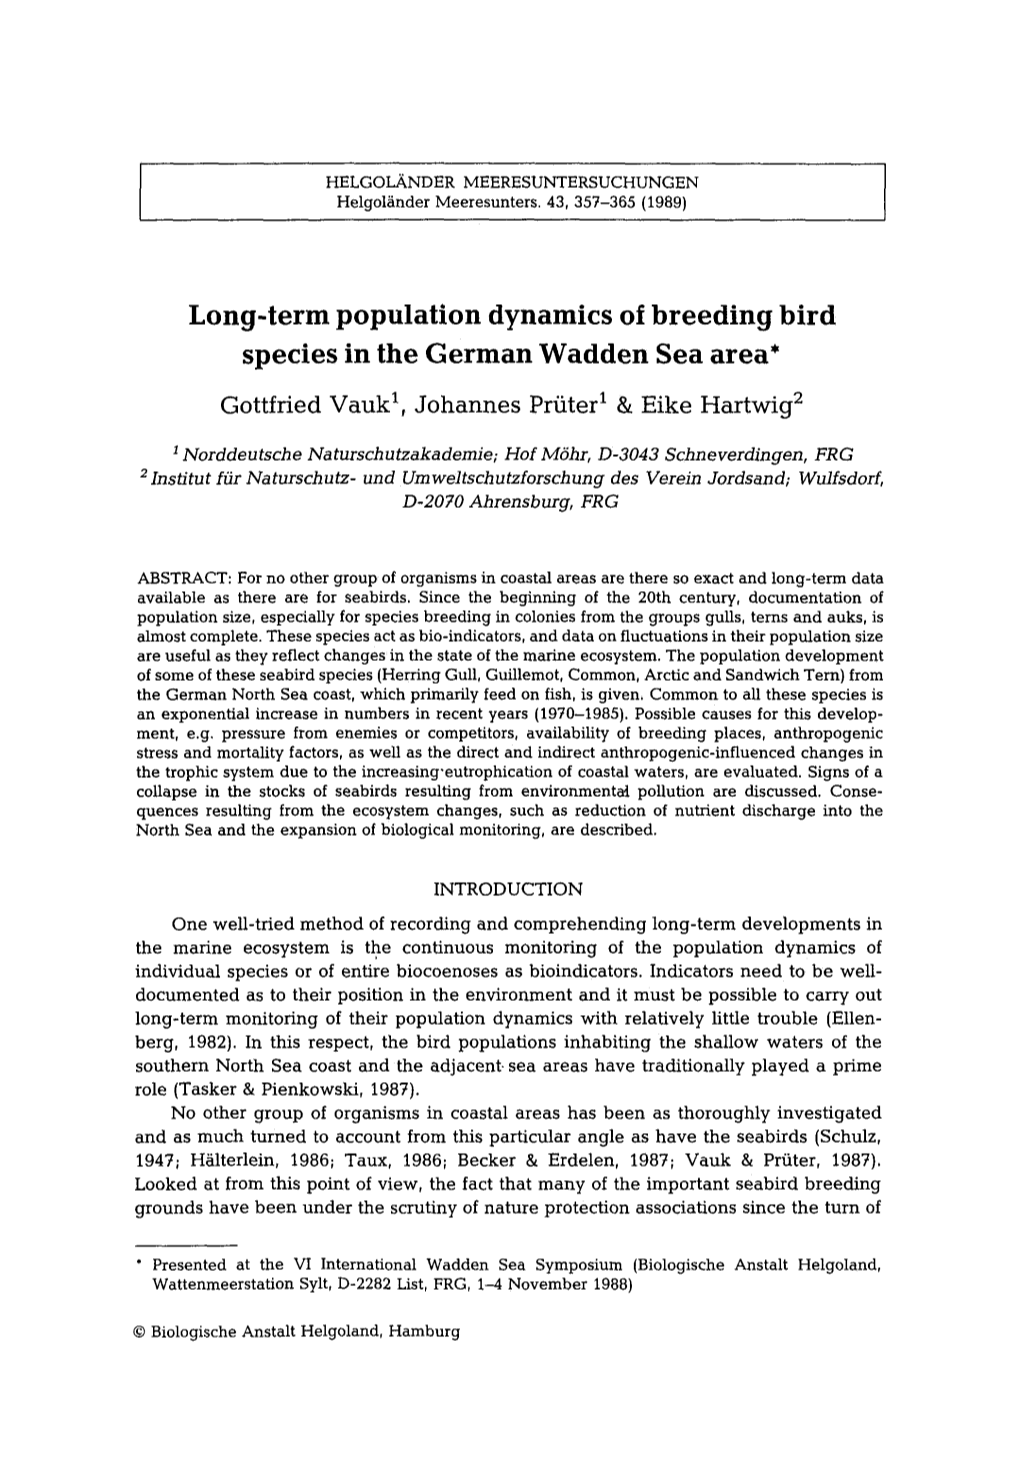 Long-Term Population Dynamics of Breeding Bird Species in the German Wadden Sea Area*